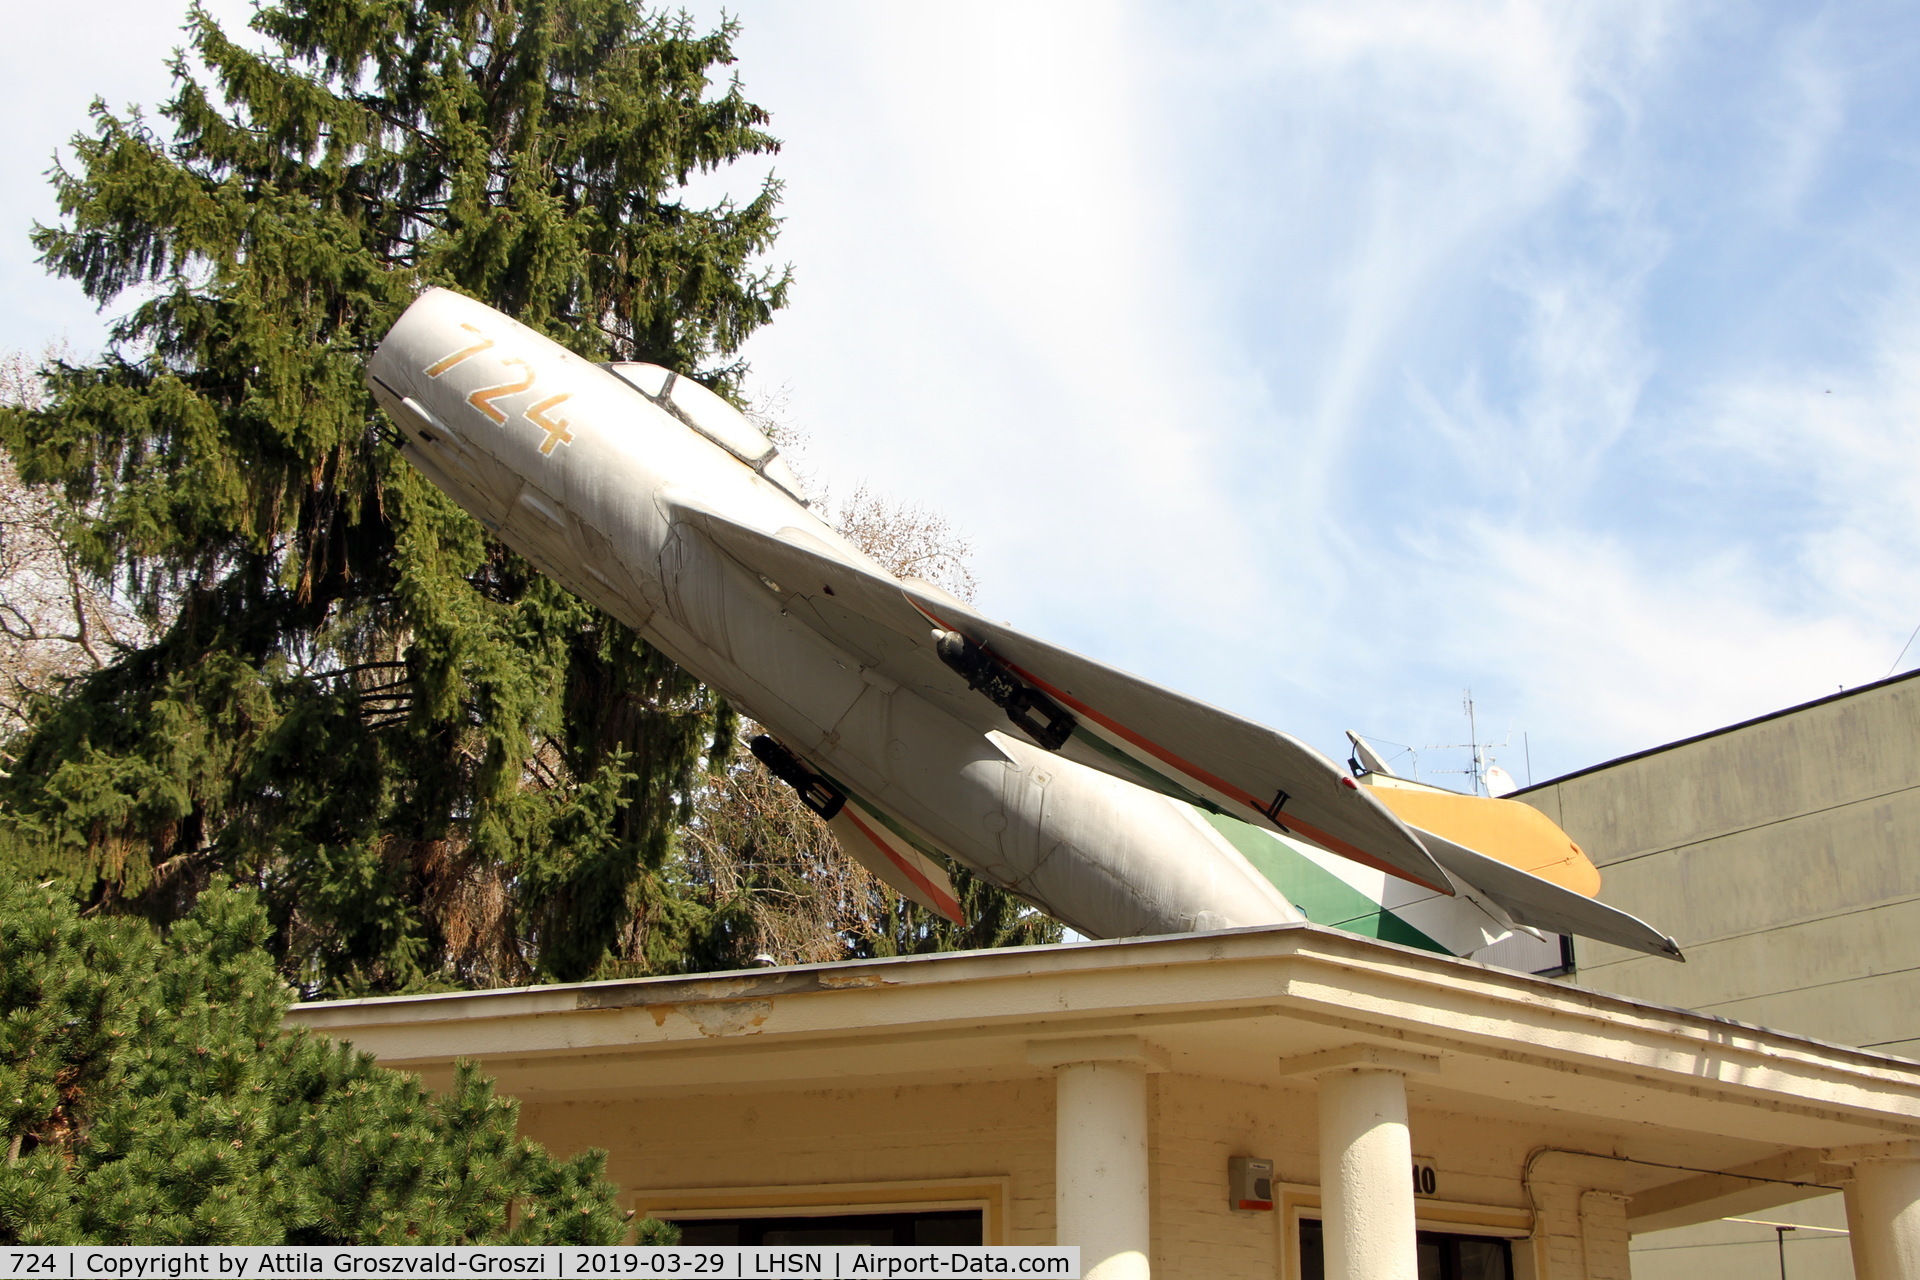 724, 1953 Mikoyan-Gurevich MiG-15 bis C/N 31530724, LHSN - Szolnok Air Base Hungary